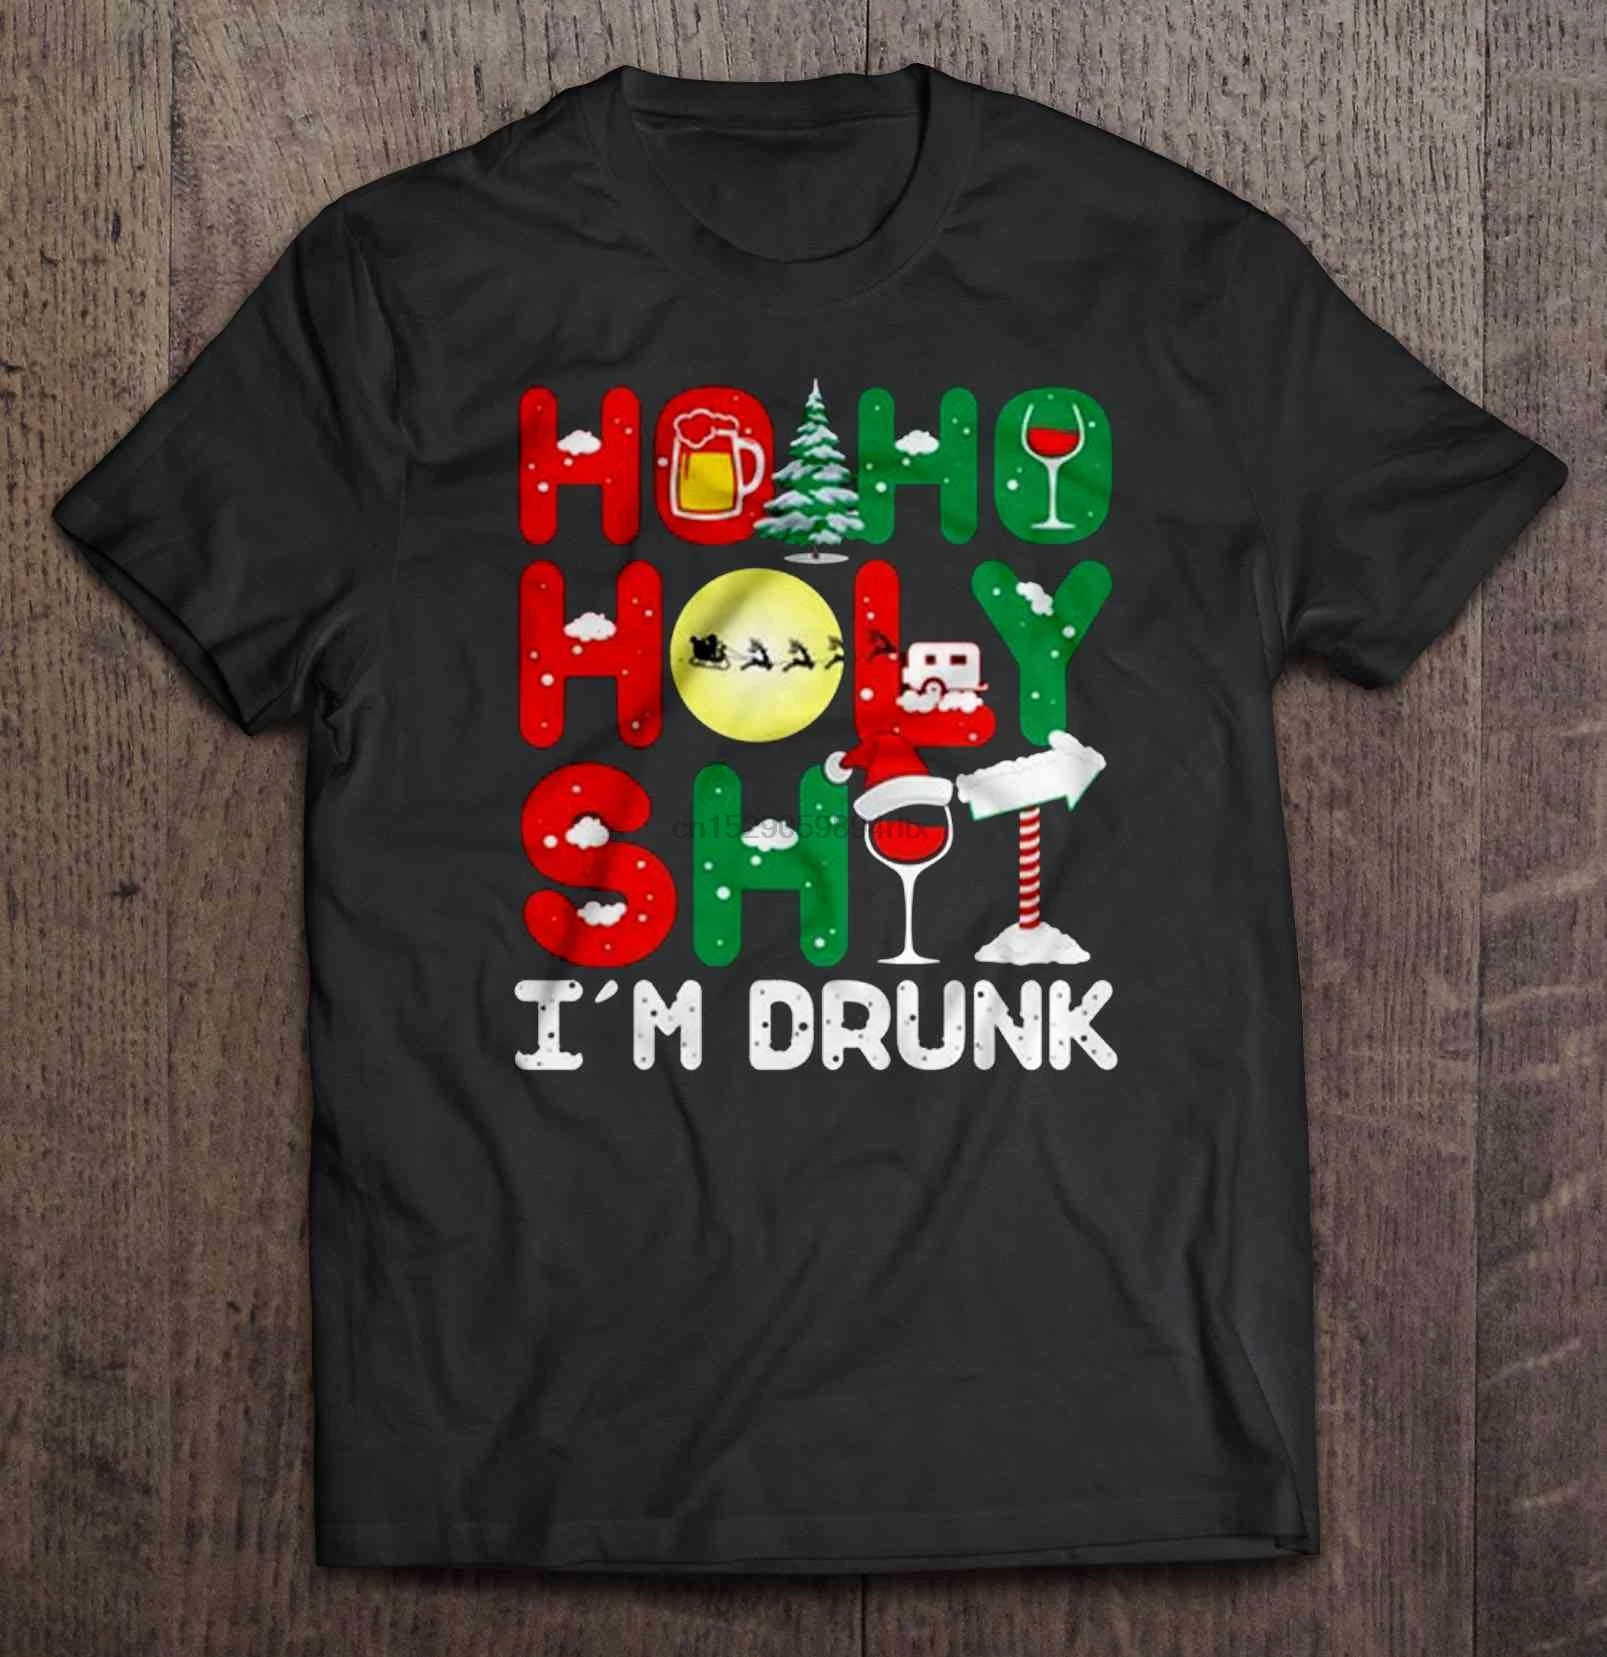 

Ho Ho Holy I'm Drunk. Unique Design Christmas Gift Mens T-Shirt. Summer Cotton Short Sleeve O-Neck Unisex T Shirt New S-3XL